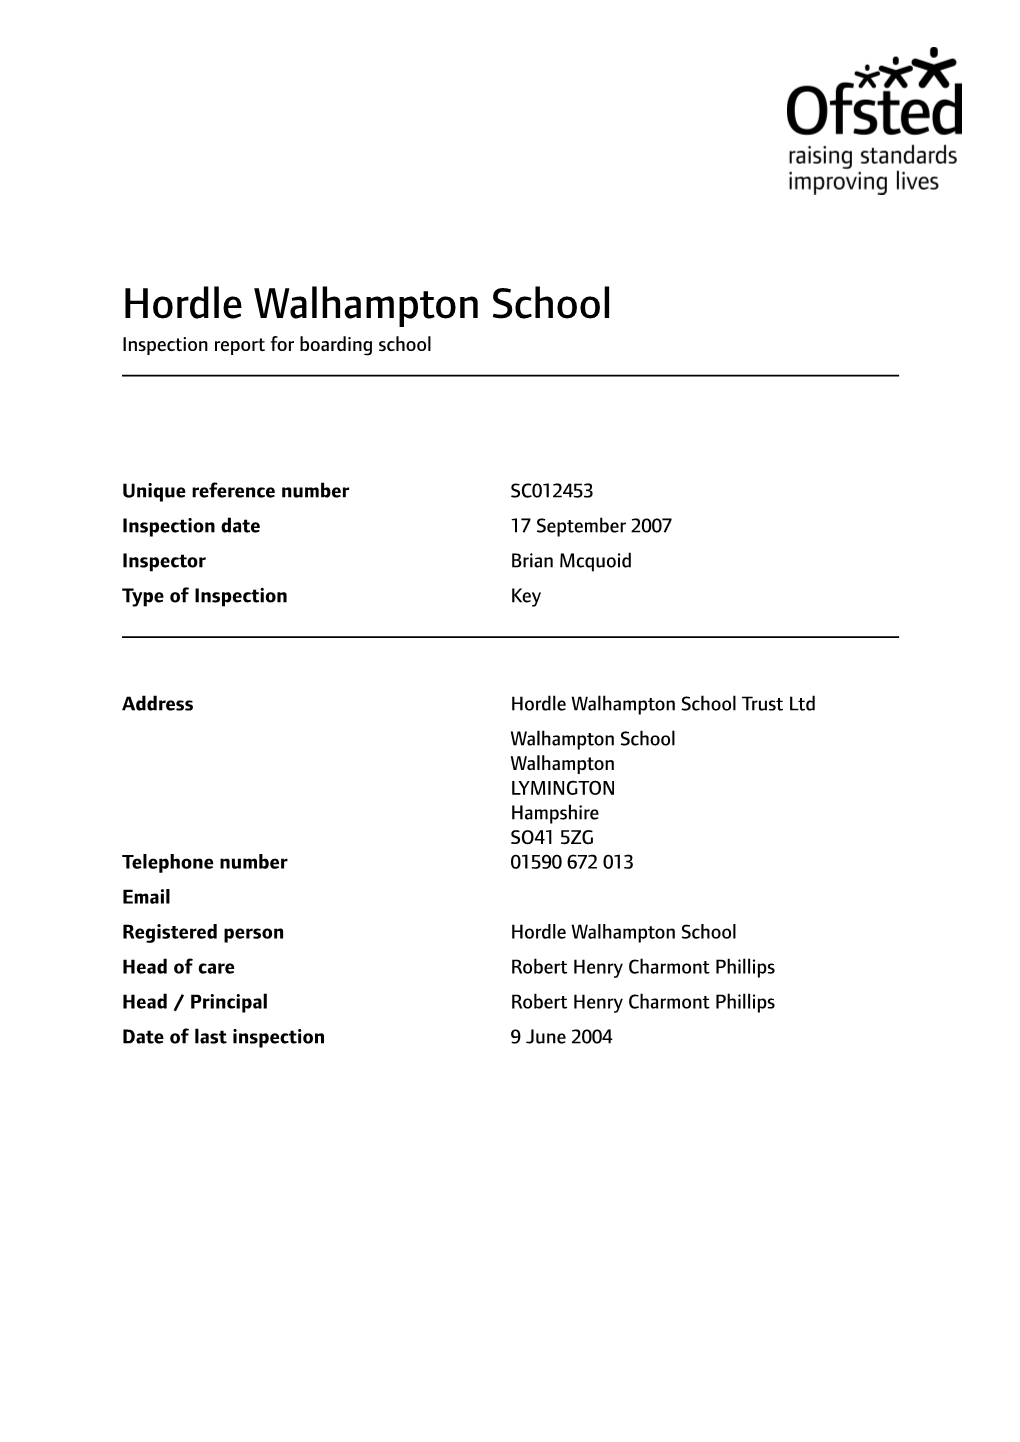 Hordle Walhampton School Inspection Report for Boarding School